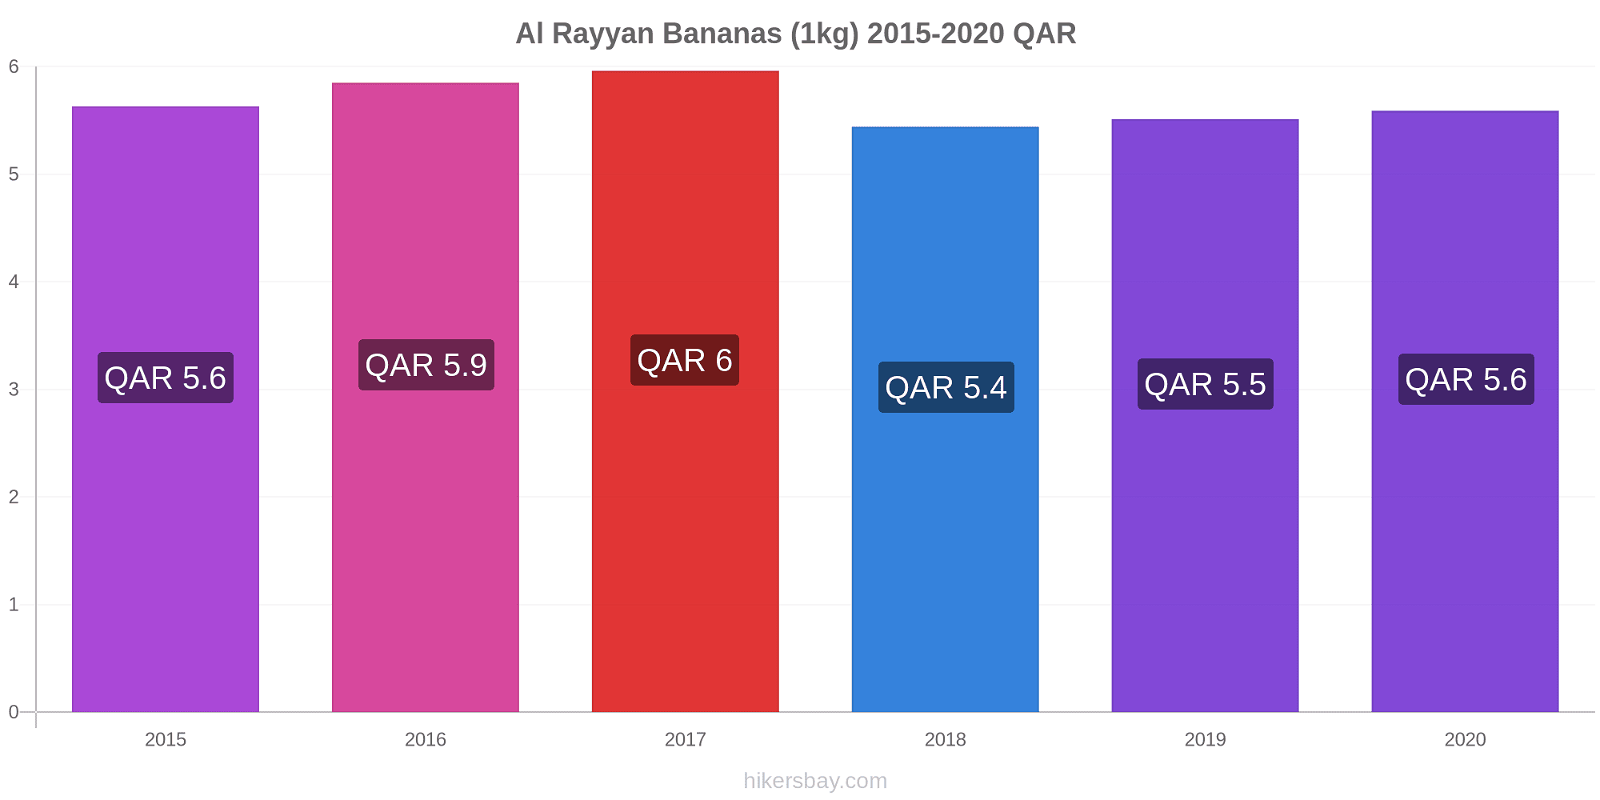 Al Rayyan price changes Bananas (1kg) hikersbay.com